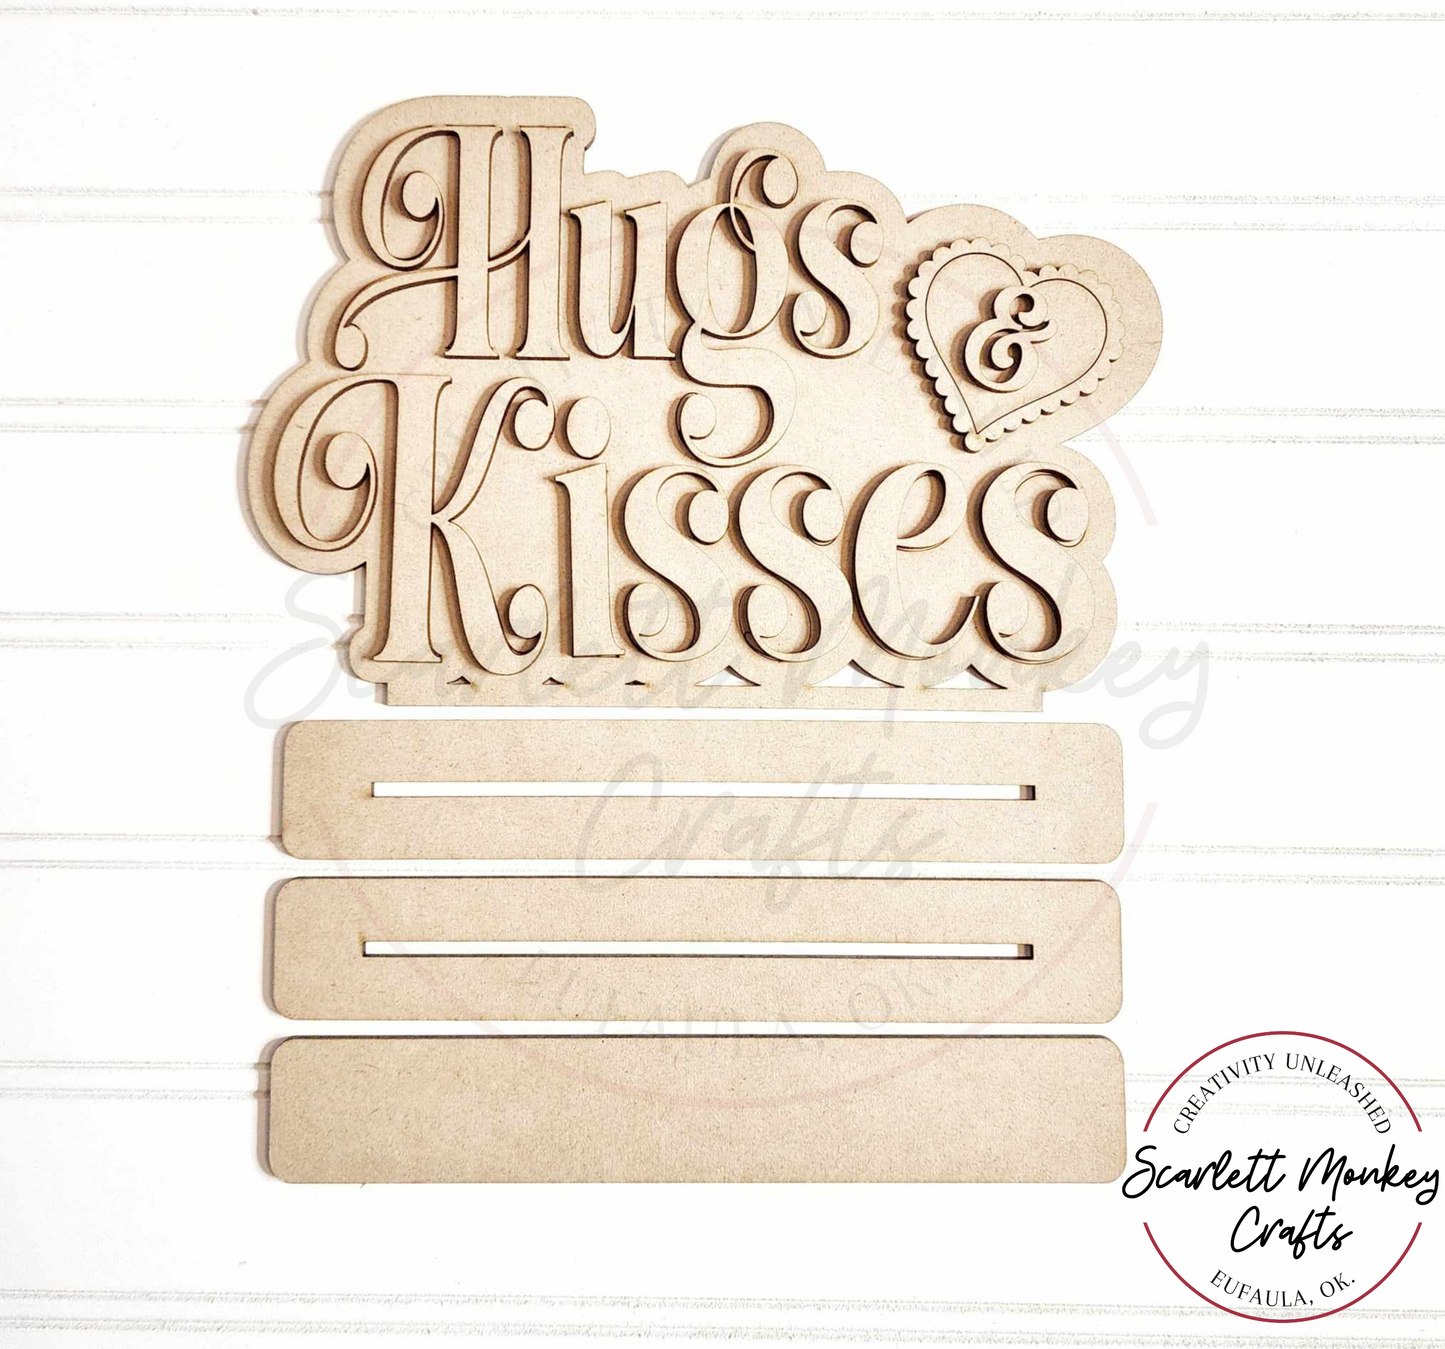 Unfinished Wood DIY Kit - Shelf Sitter - Hugs & Kisses